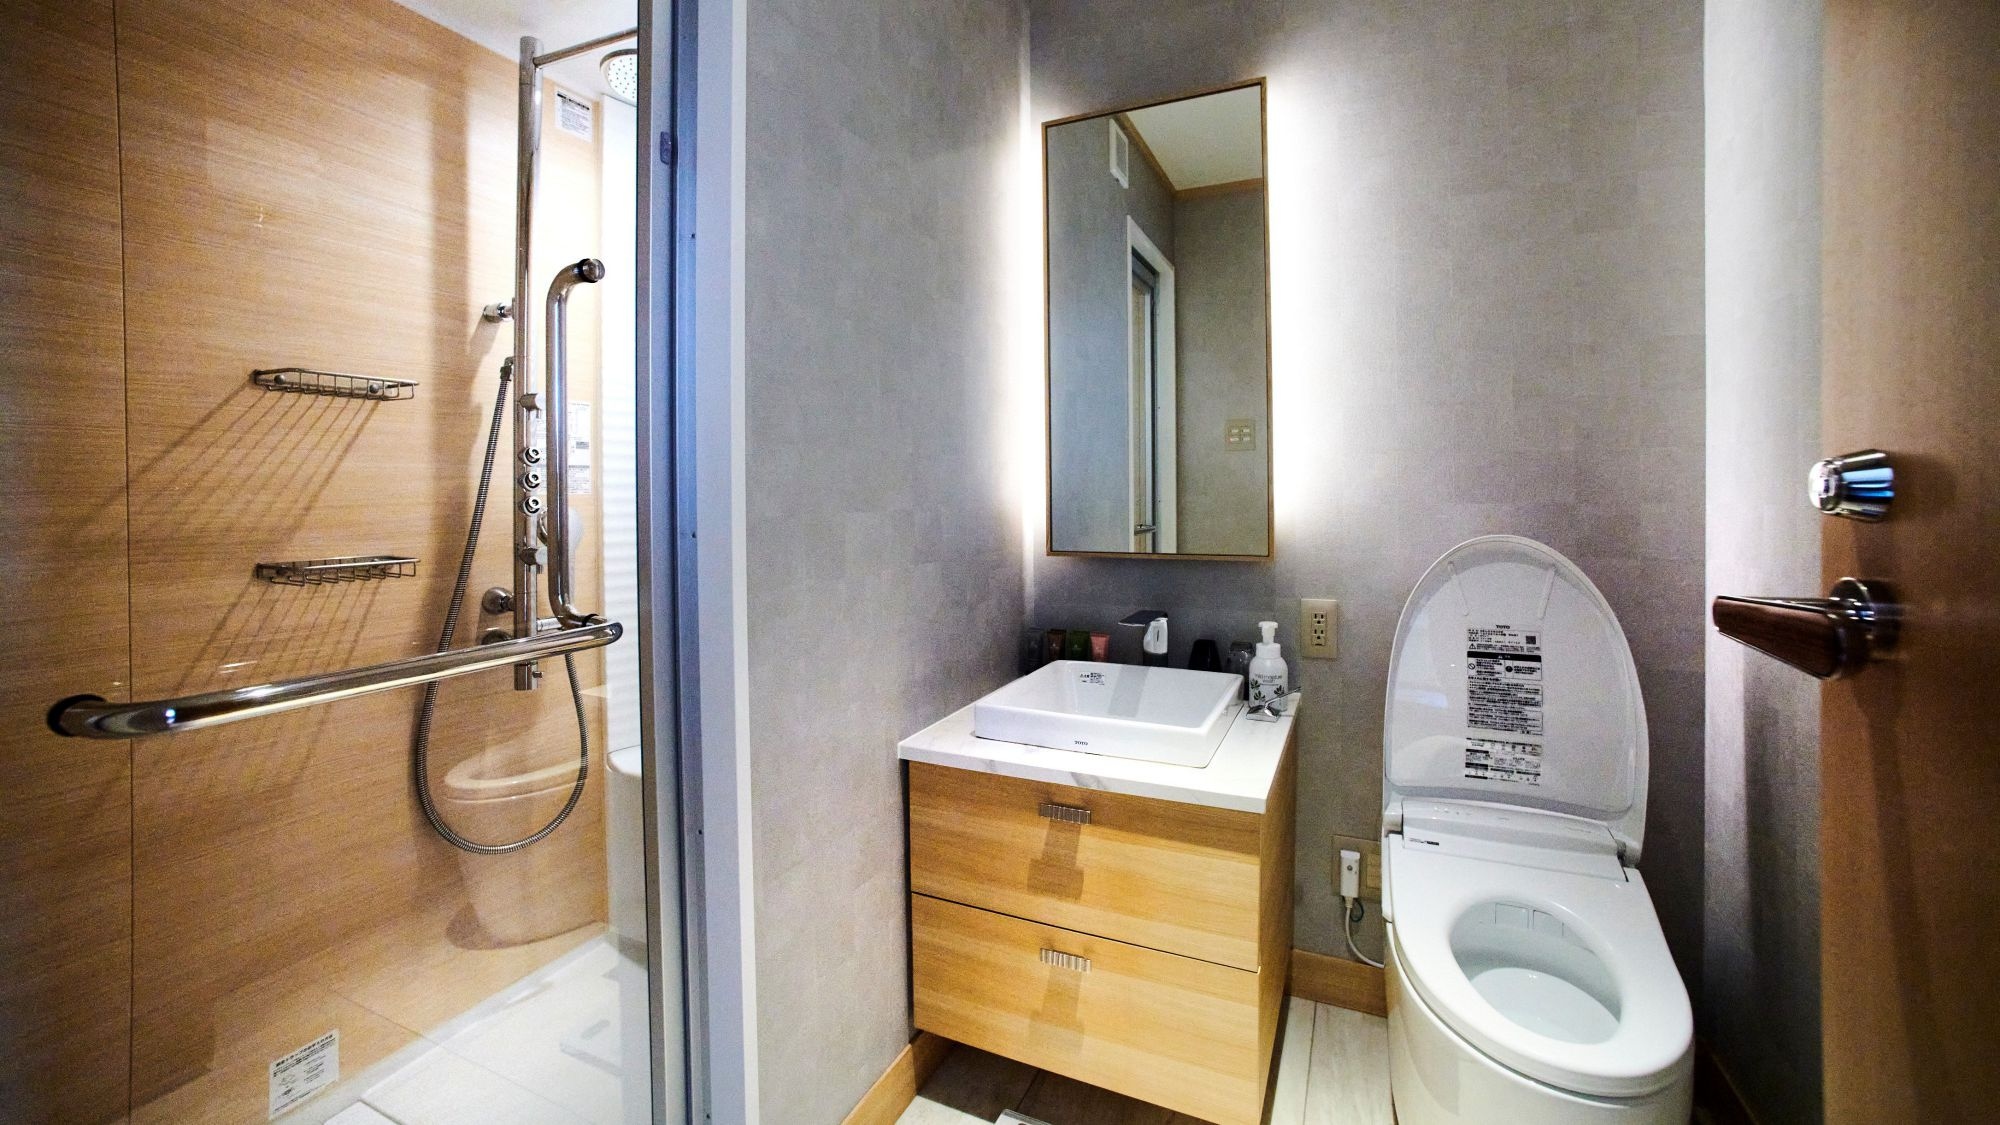 ■ "Enoshima Hotel" shower room and washroom